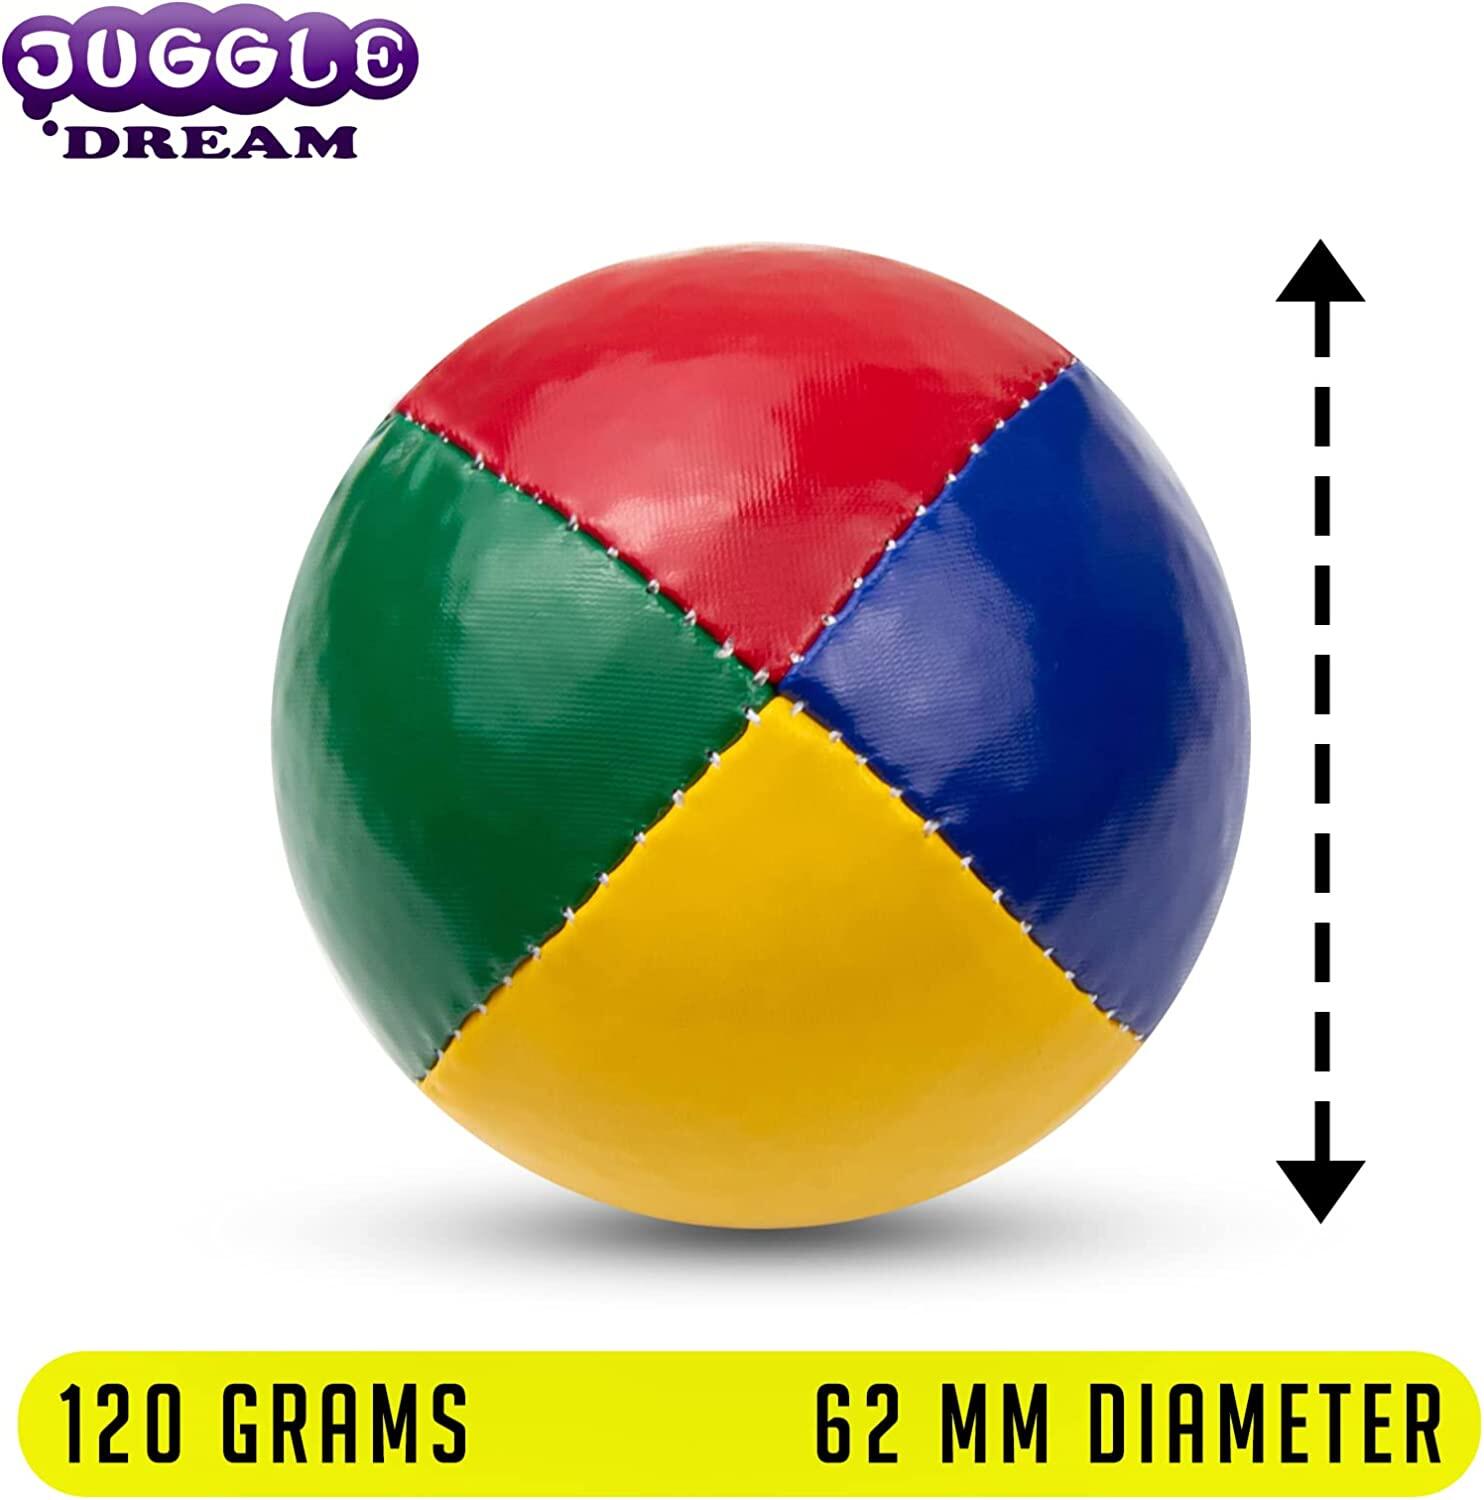 Juggle Dream 3x Pro Thud Juggling Balls - Set of 3 Professional Juggling Balls w 3/5